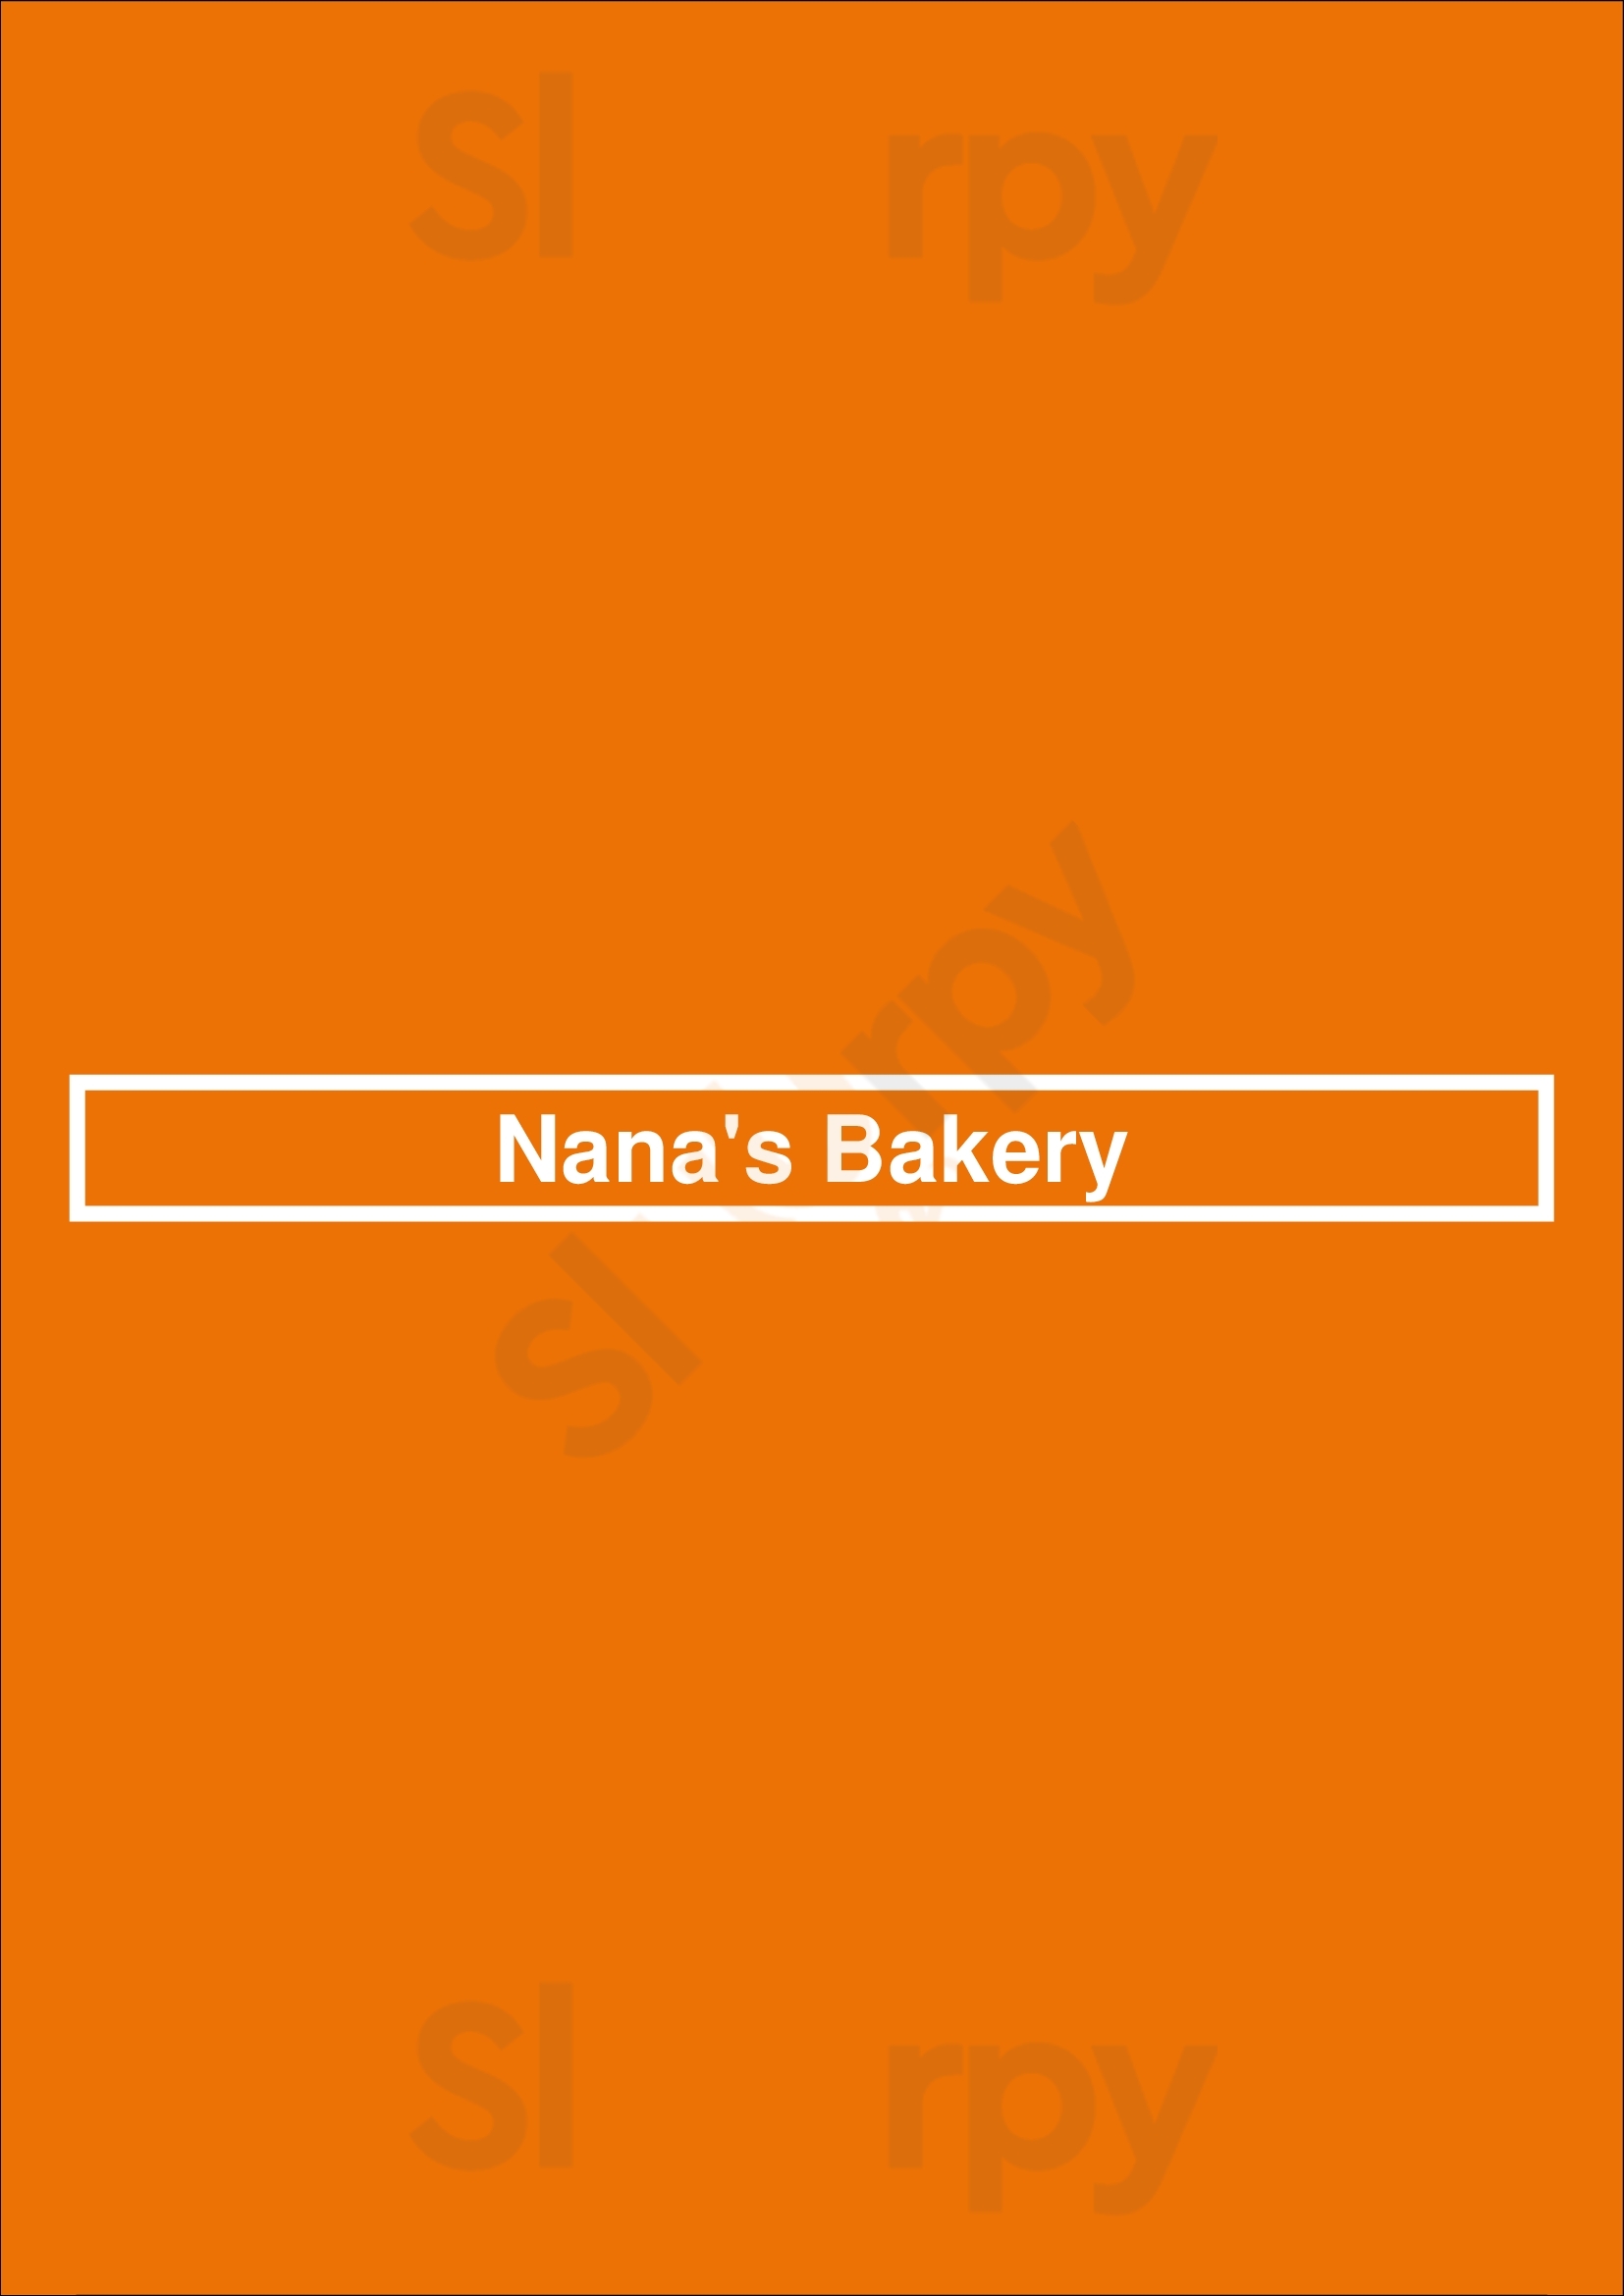 Nana's Bakery Burnaby Menu - 1